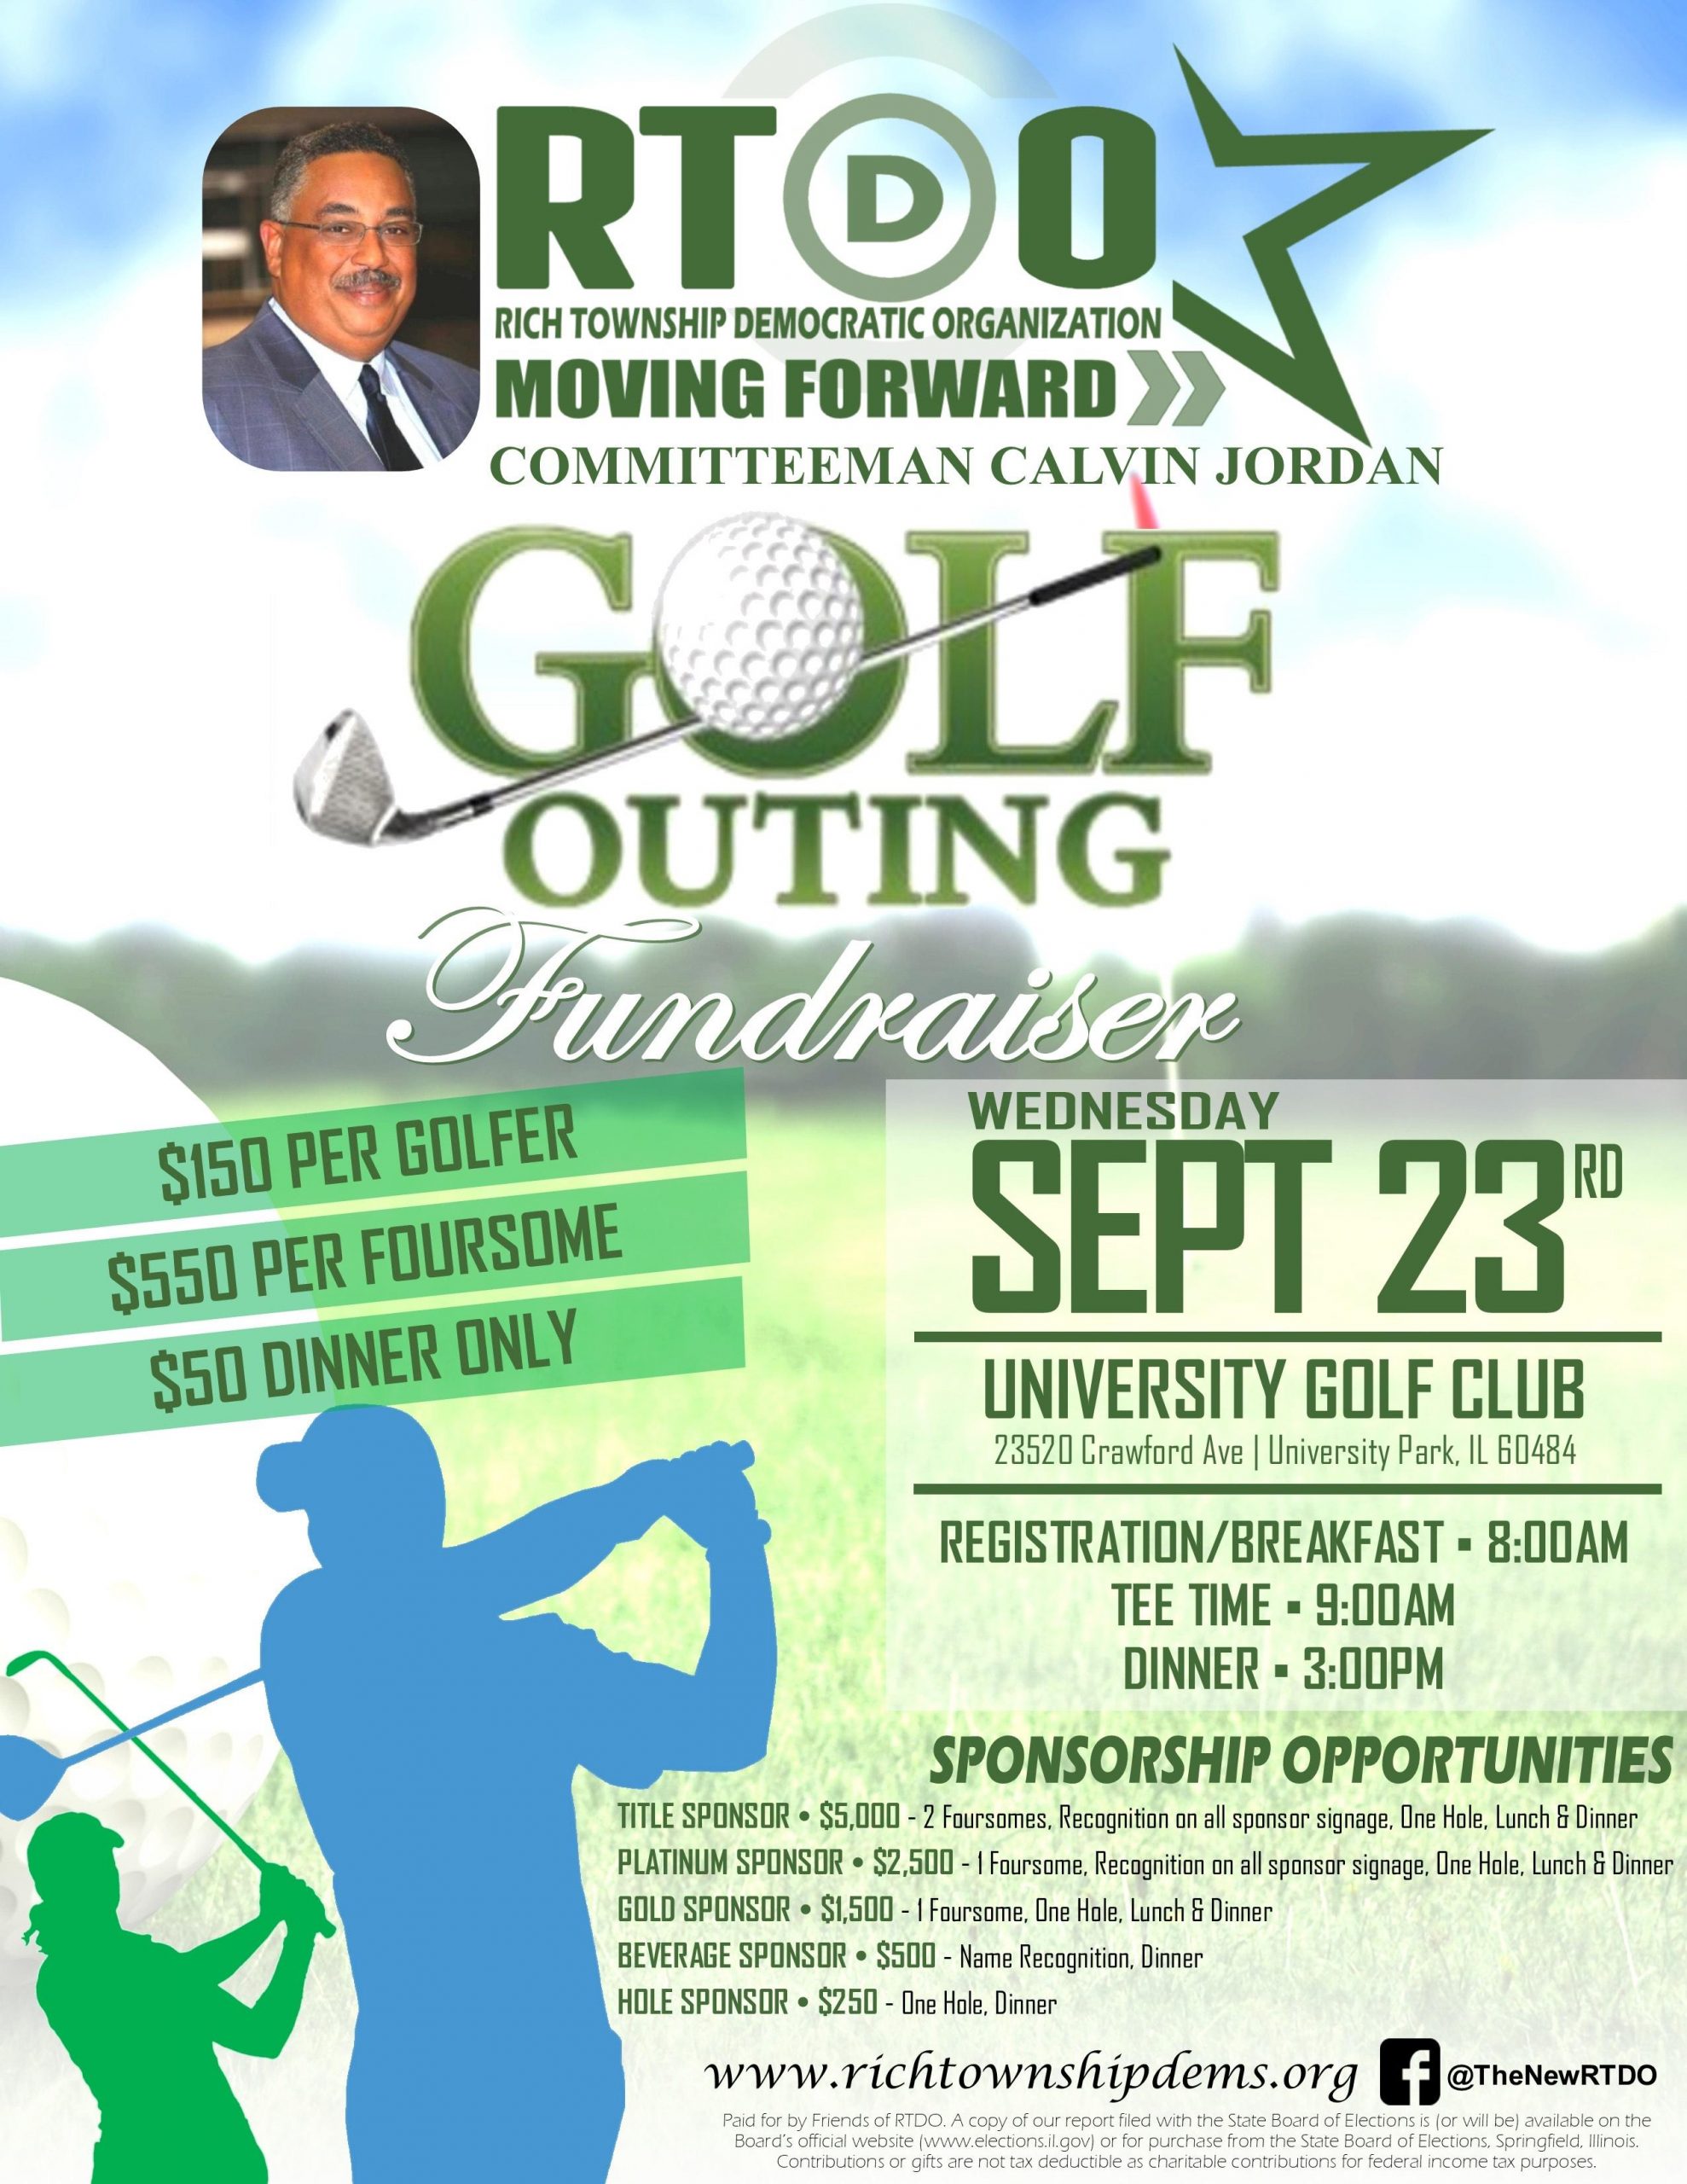 2020 Golf Outing - Rich Township Democratic Organization